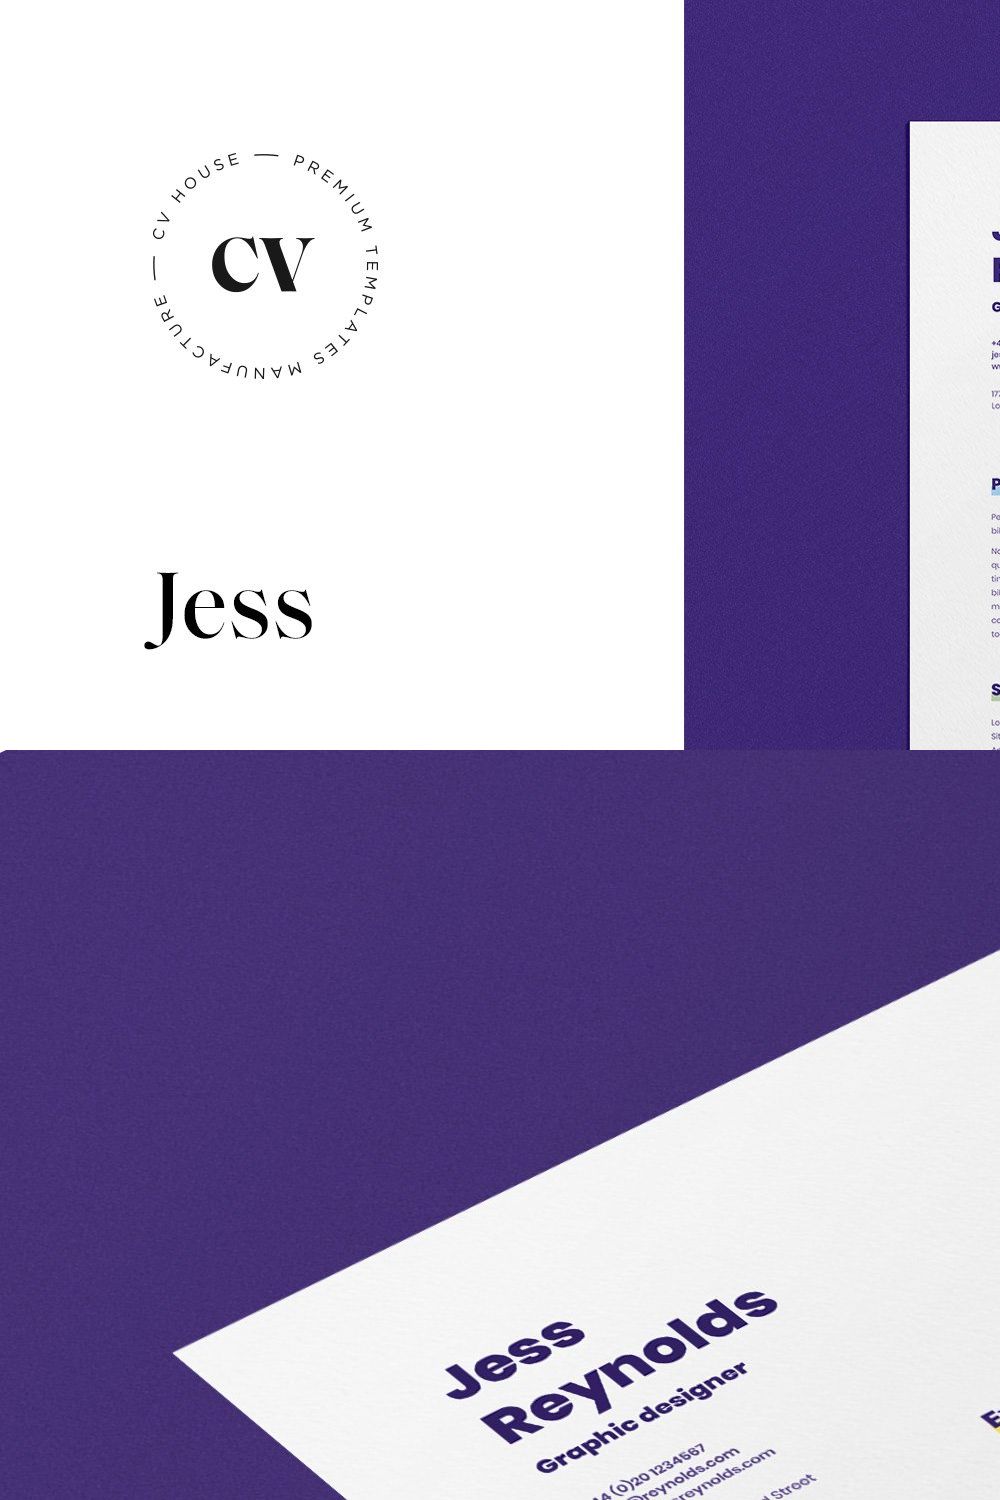 Jess | CV / resume template pinterest preview image.